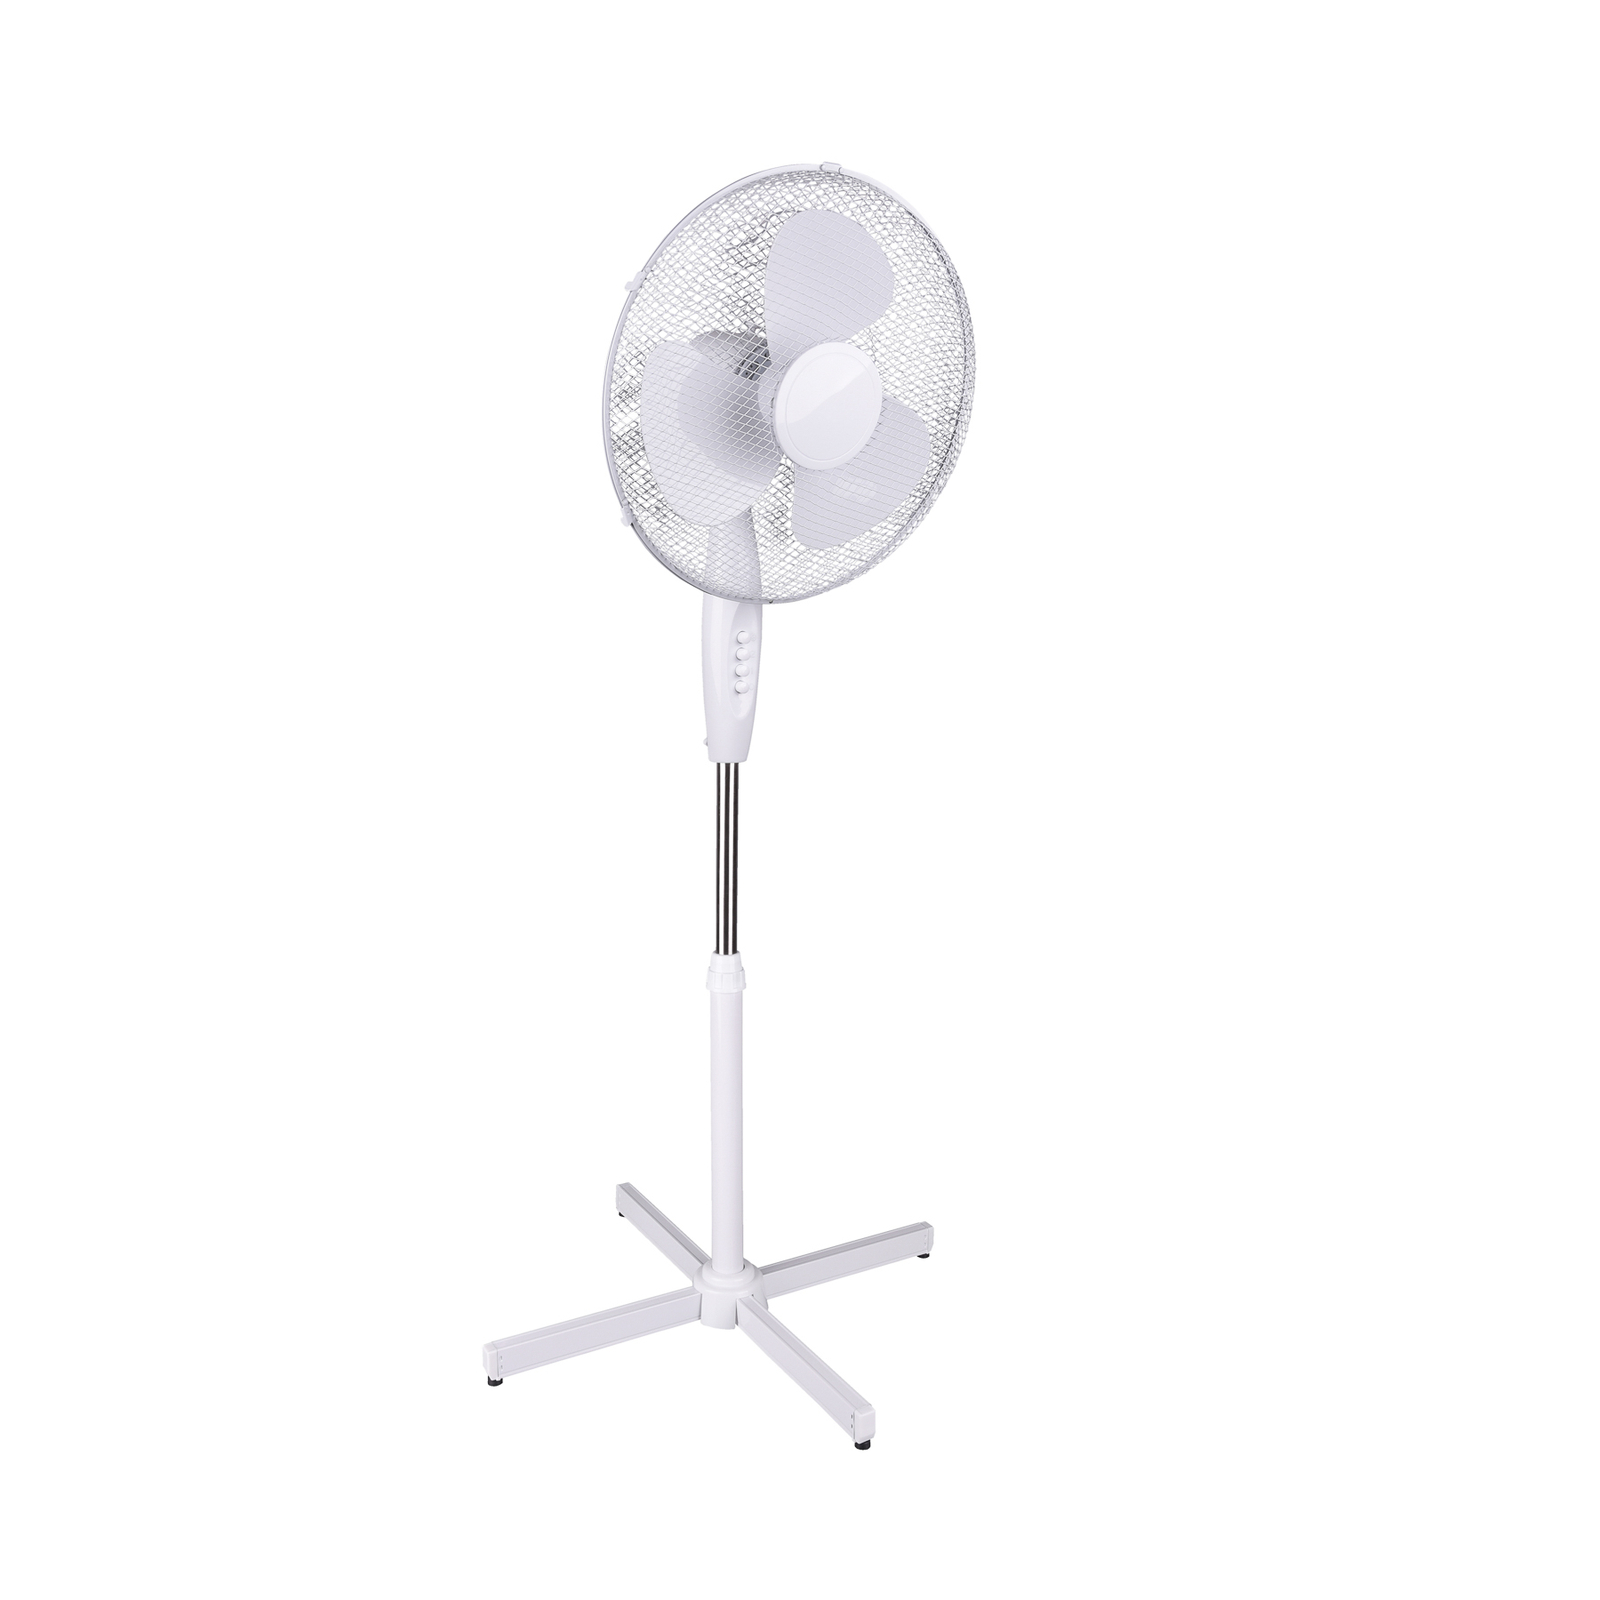 Starluna Guvalio pedestal fan, oscillating